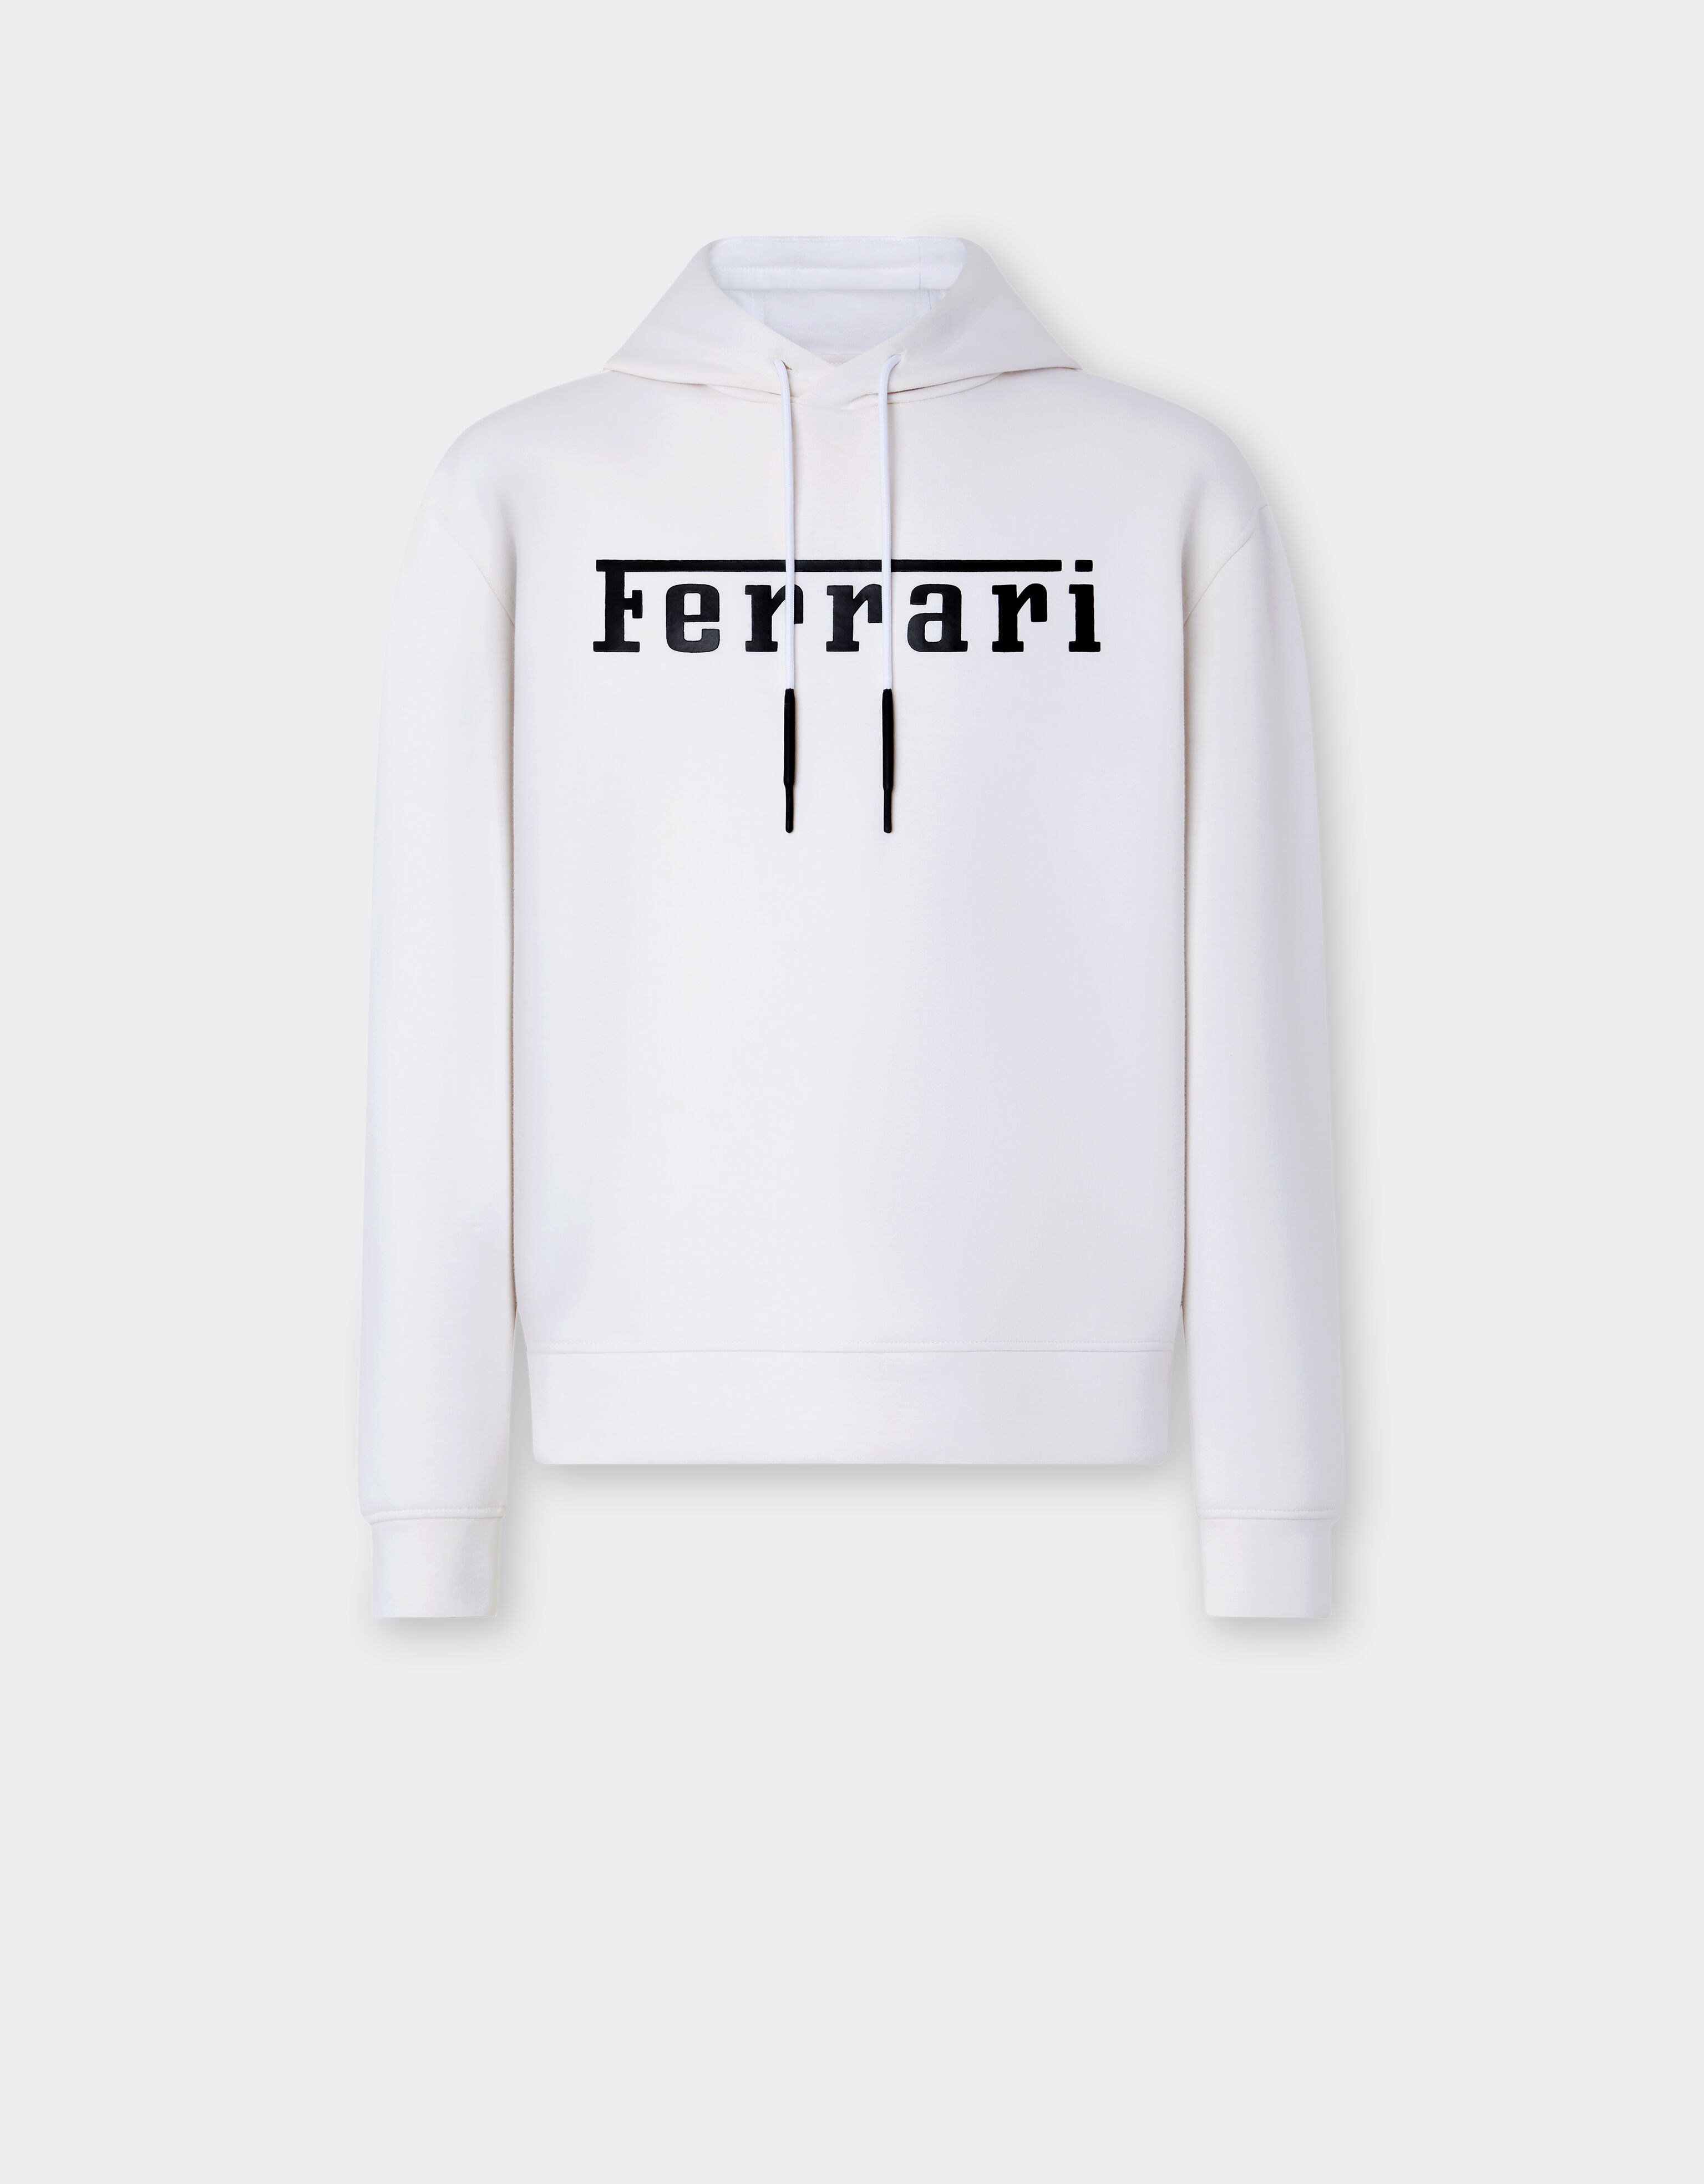 Ferrari Scuba knit sweatshirt with contrast Ferrari logo Navy 48267f